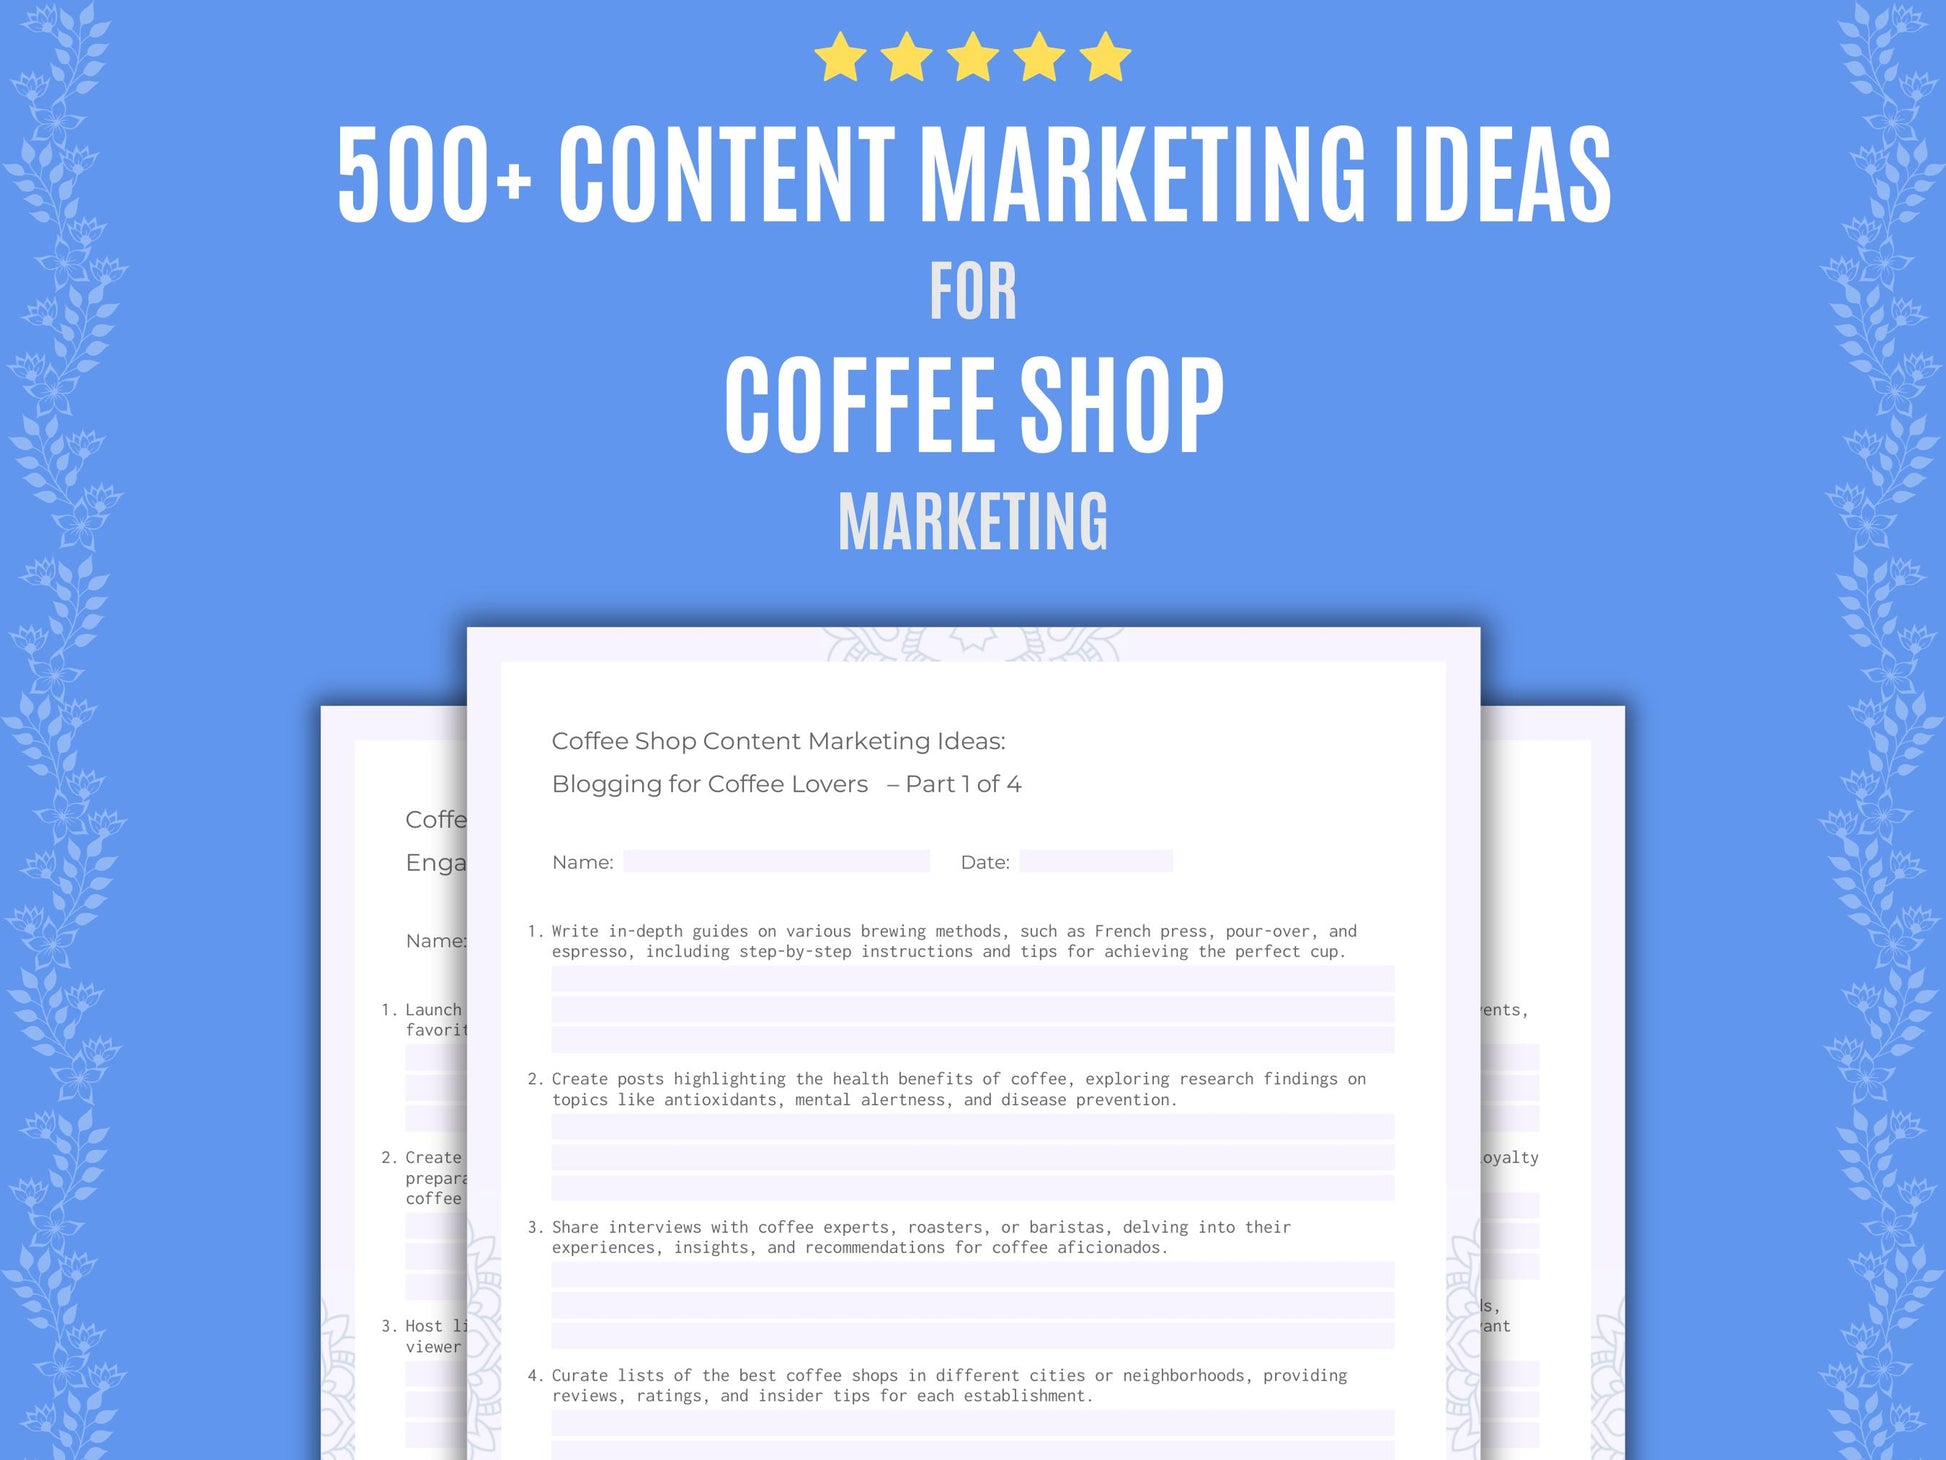 Coffee Shop Content Marketing Ideas